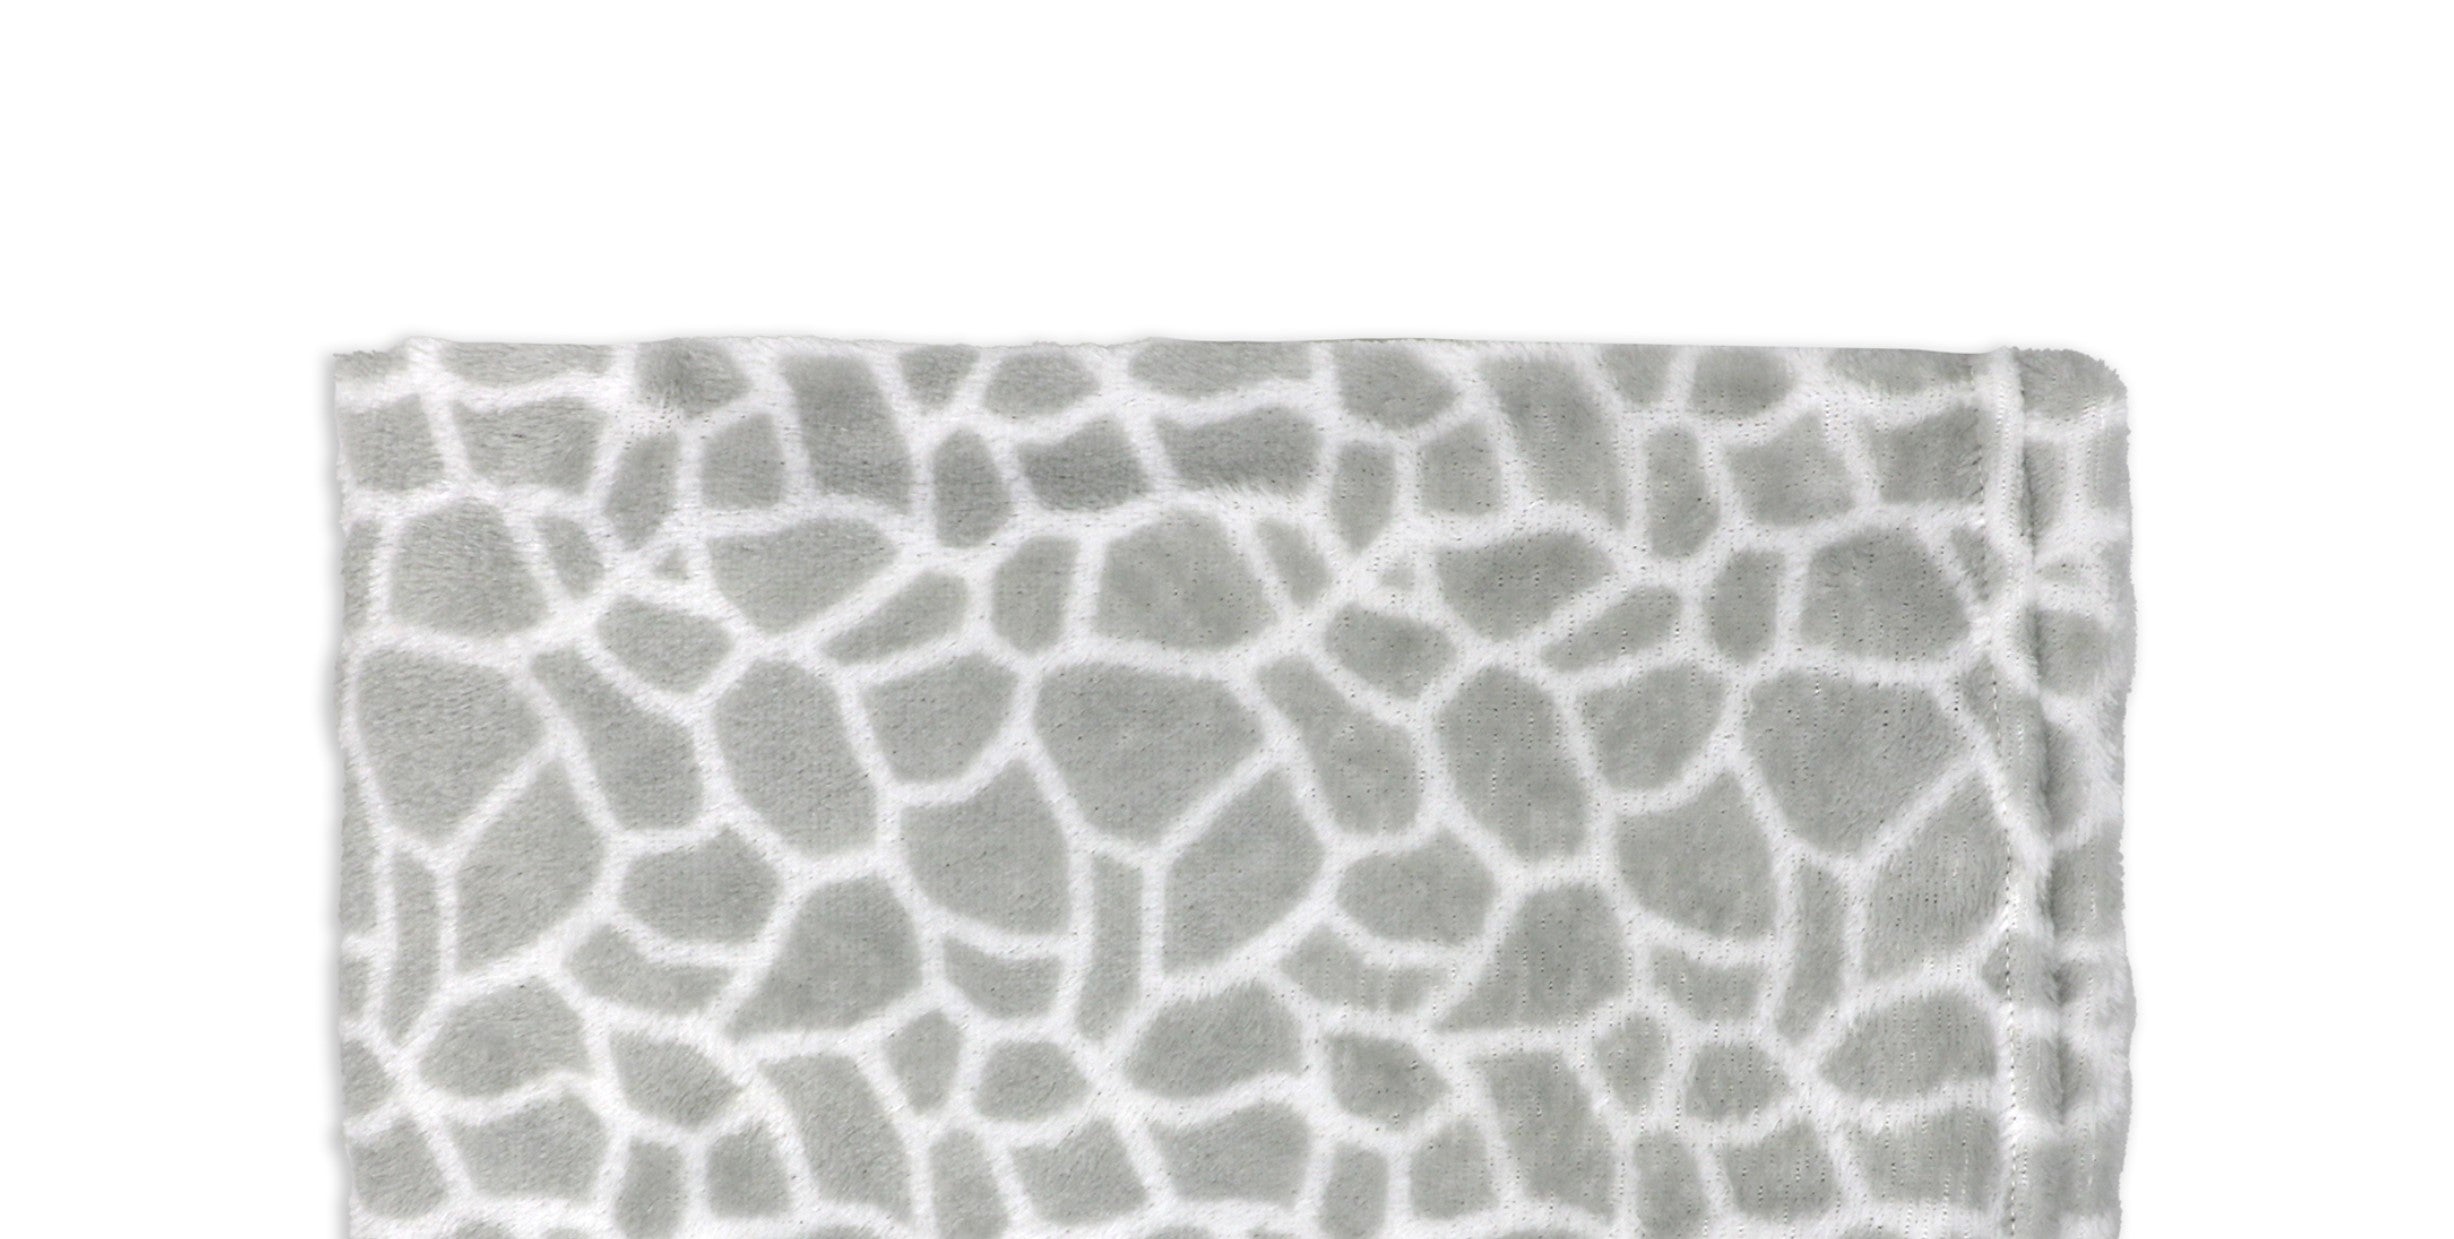 Giraffe Flannel Fleece Baby Blanket, 30 x 36 in, White & Grey Color